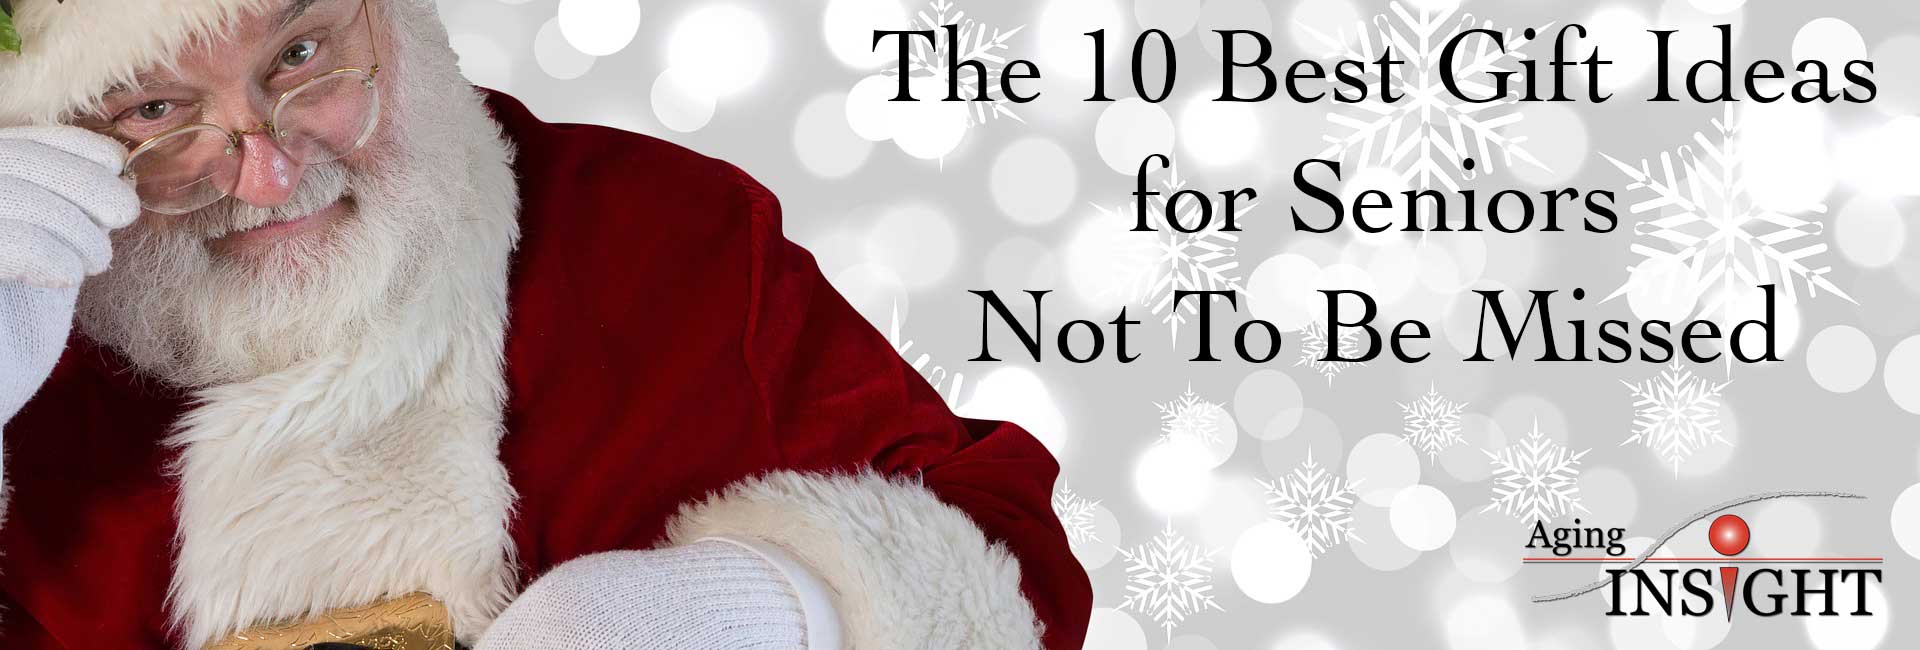 10-best-gift-ideas-seniors-not-be-missed